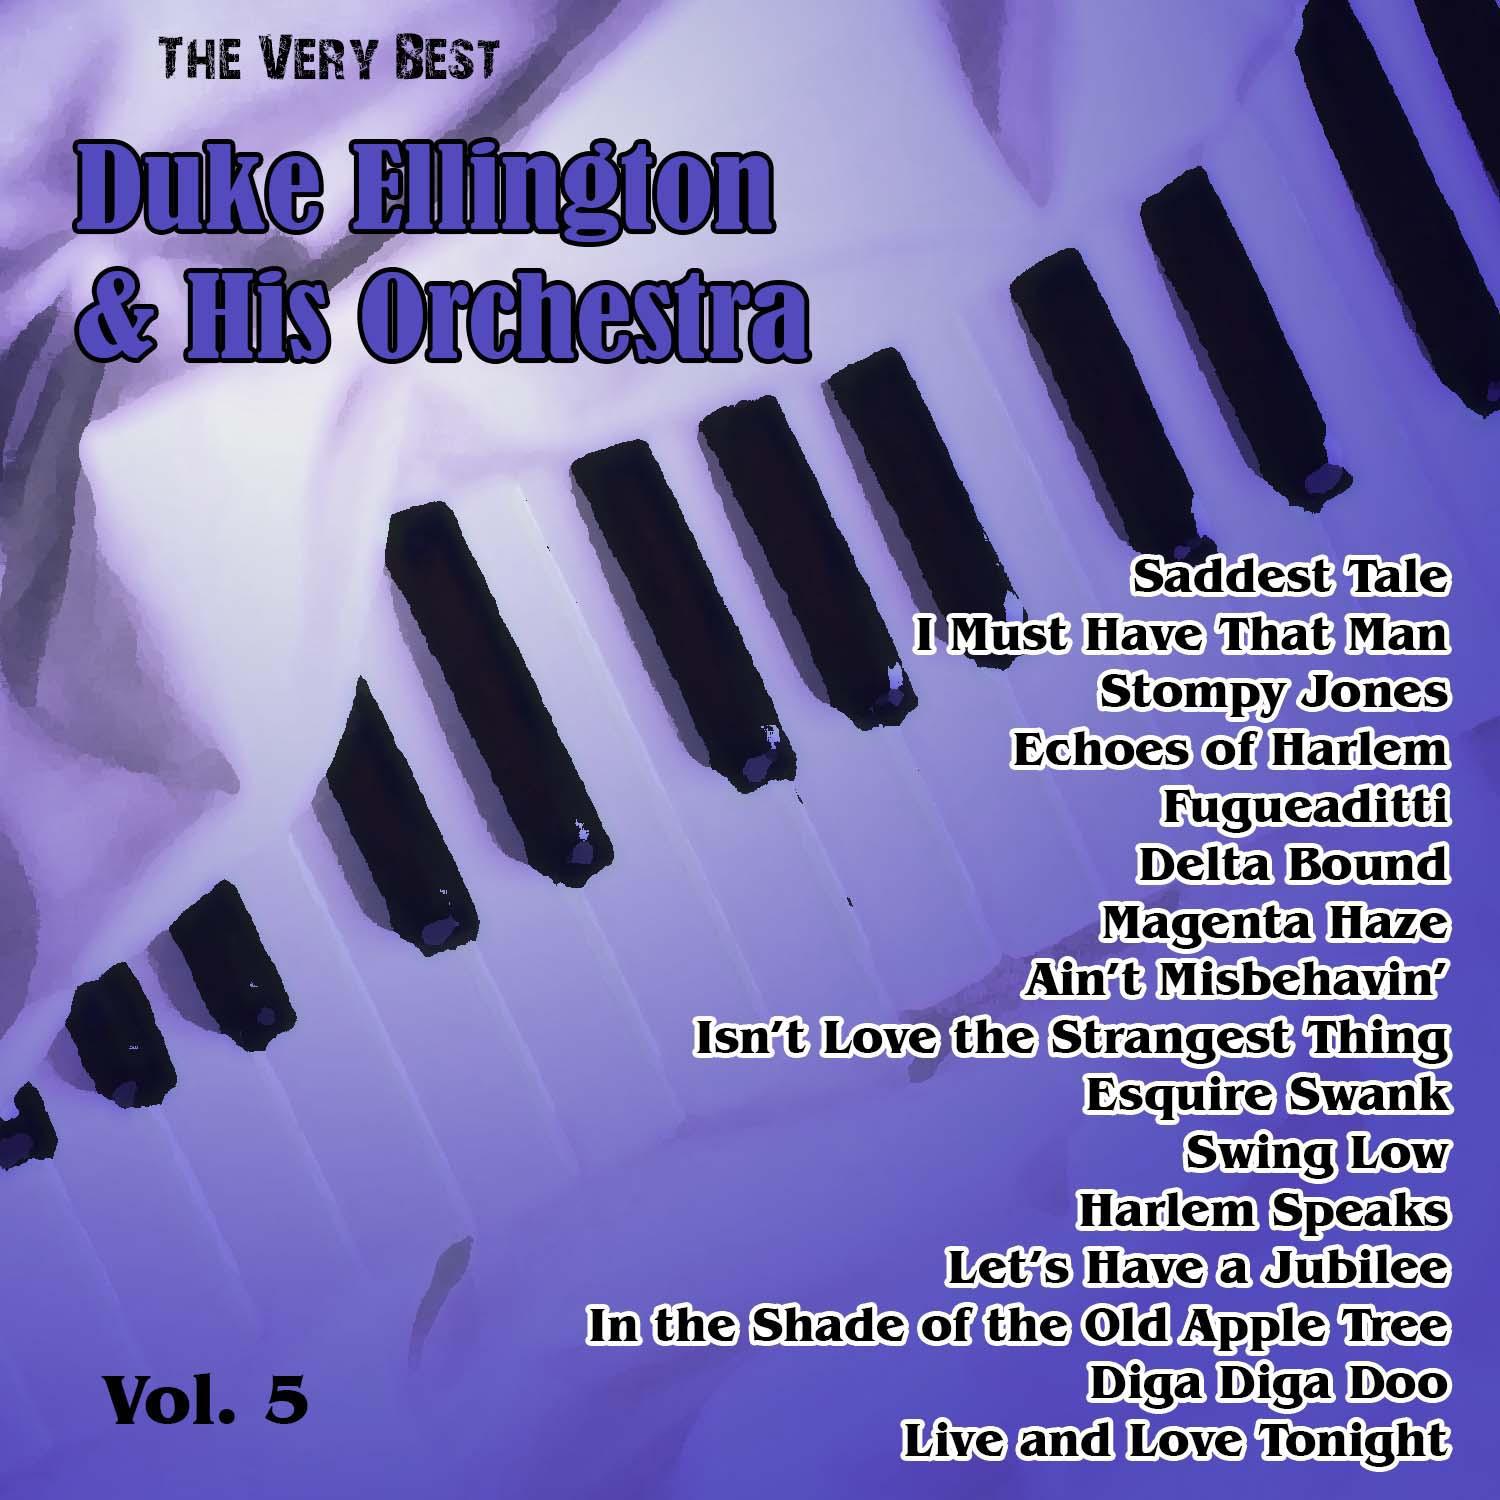 The Very Best: Duke Ellington & His Orchestra Vol. 5